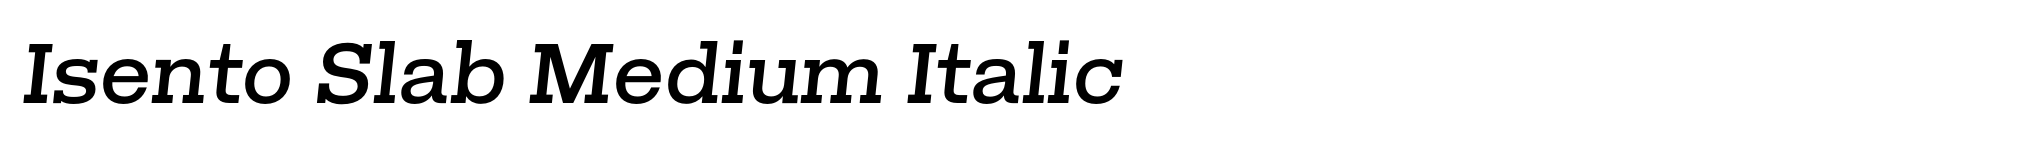 Isento Slab Medium Italic image